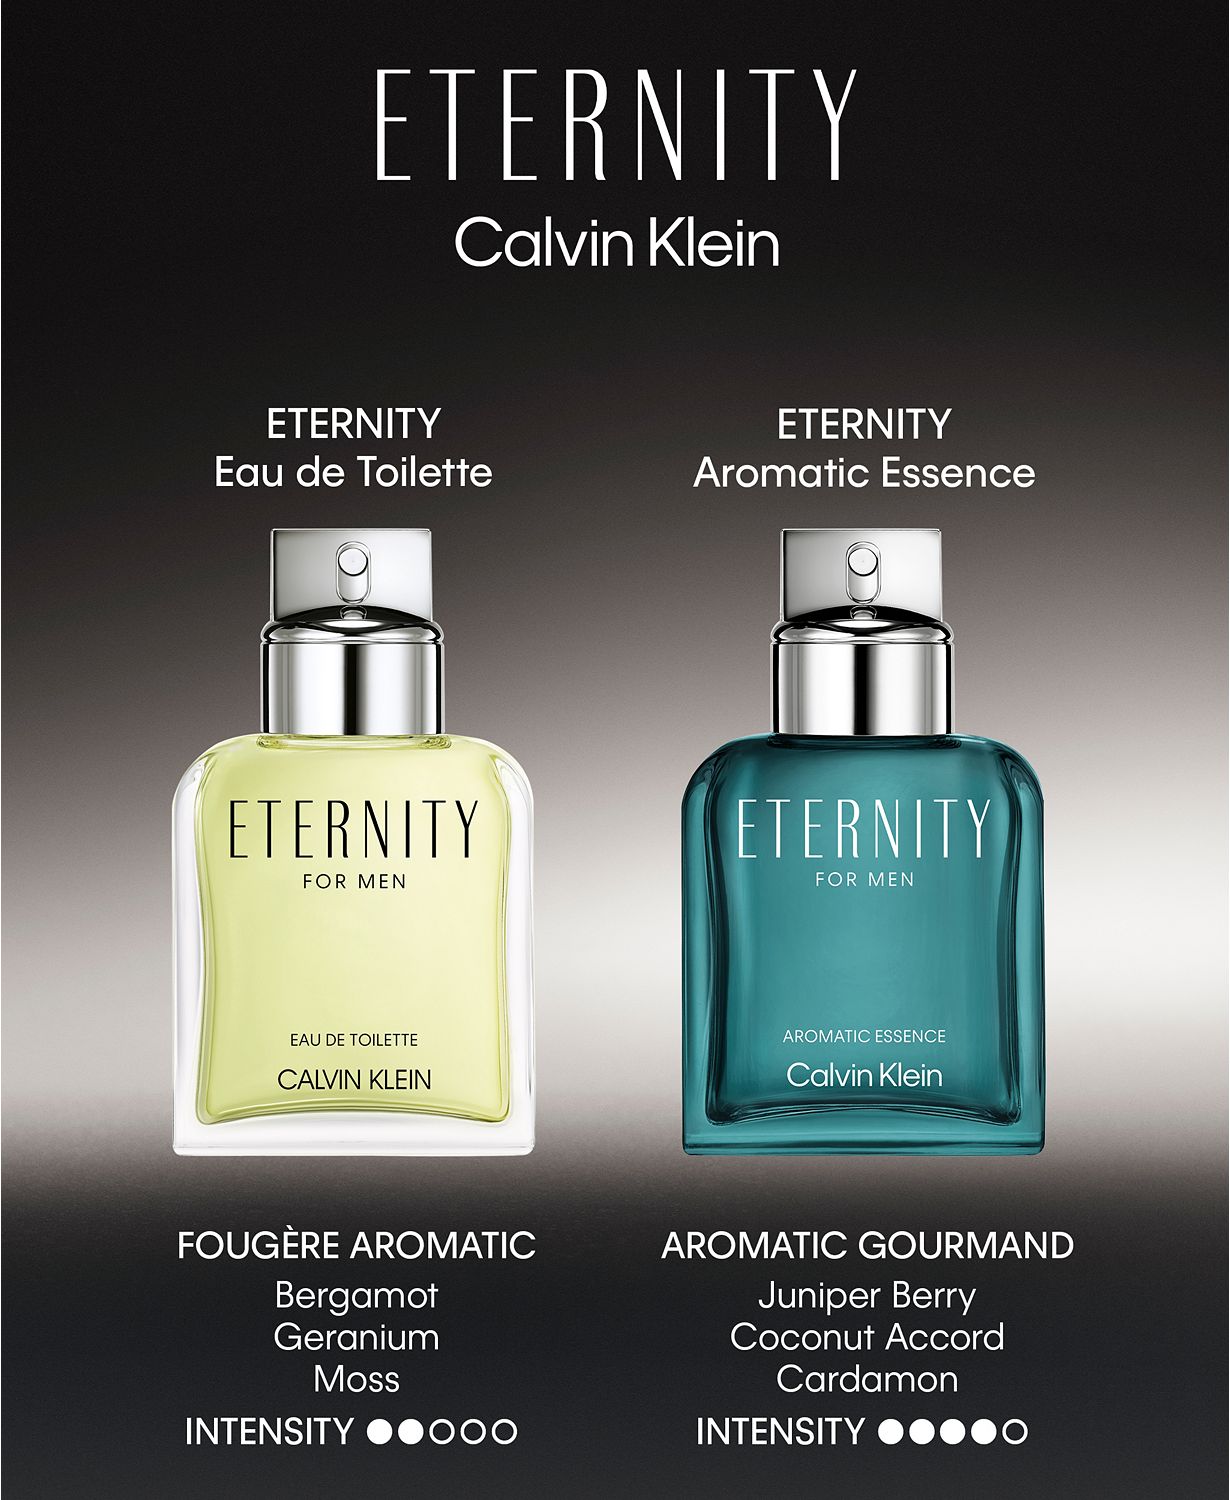 Men's Eternity Aromatic Essence Parfum Intense Spray, 1.6 oz.